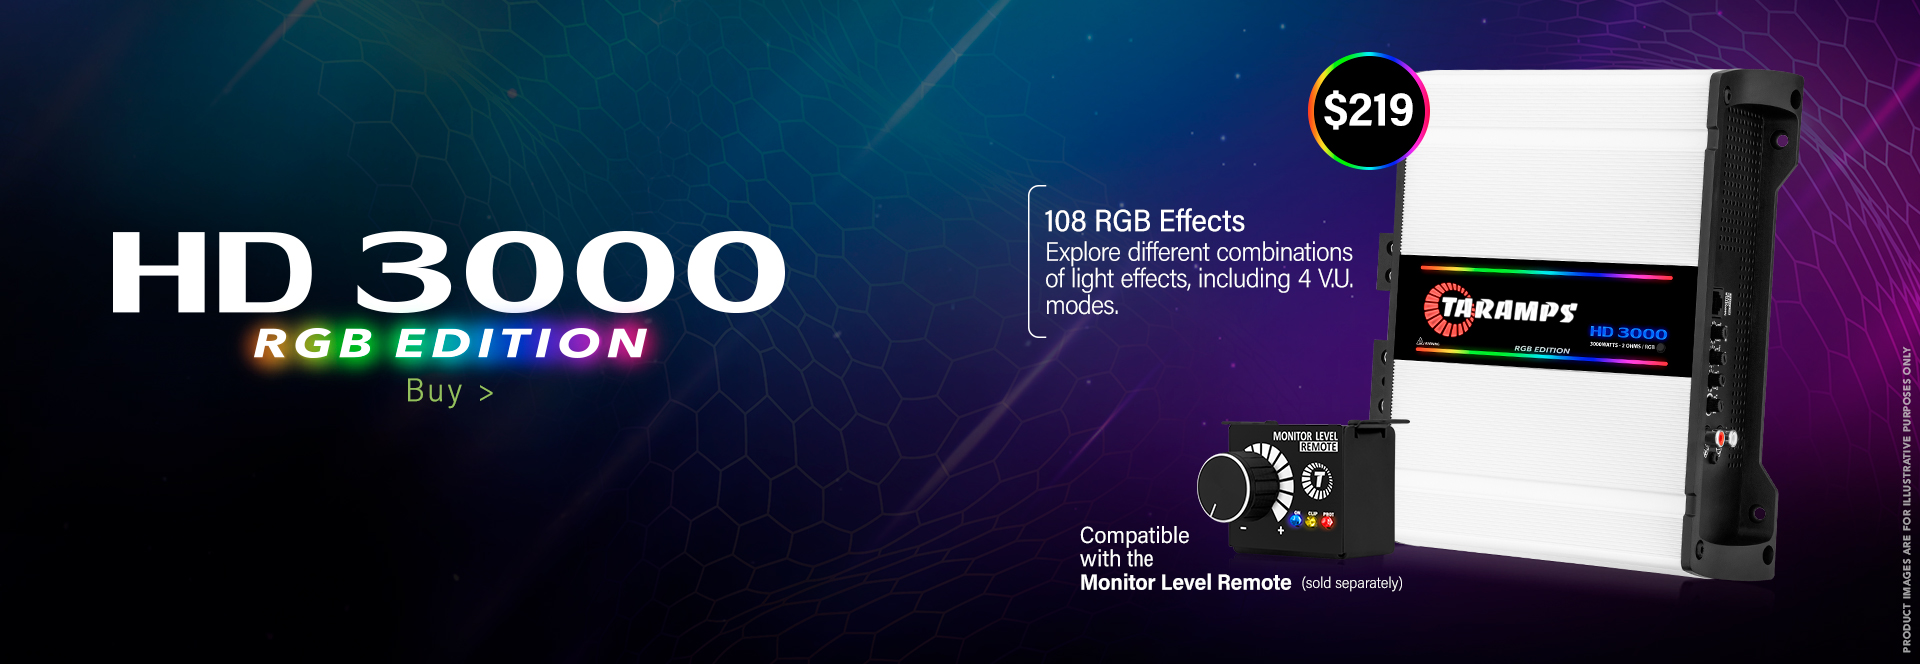 HD 3000 RGB - Banner 3